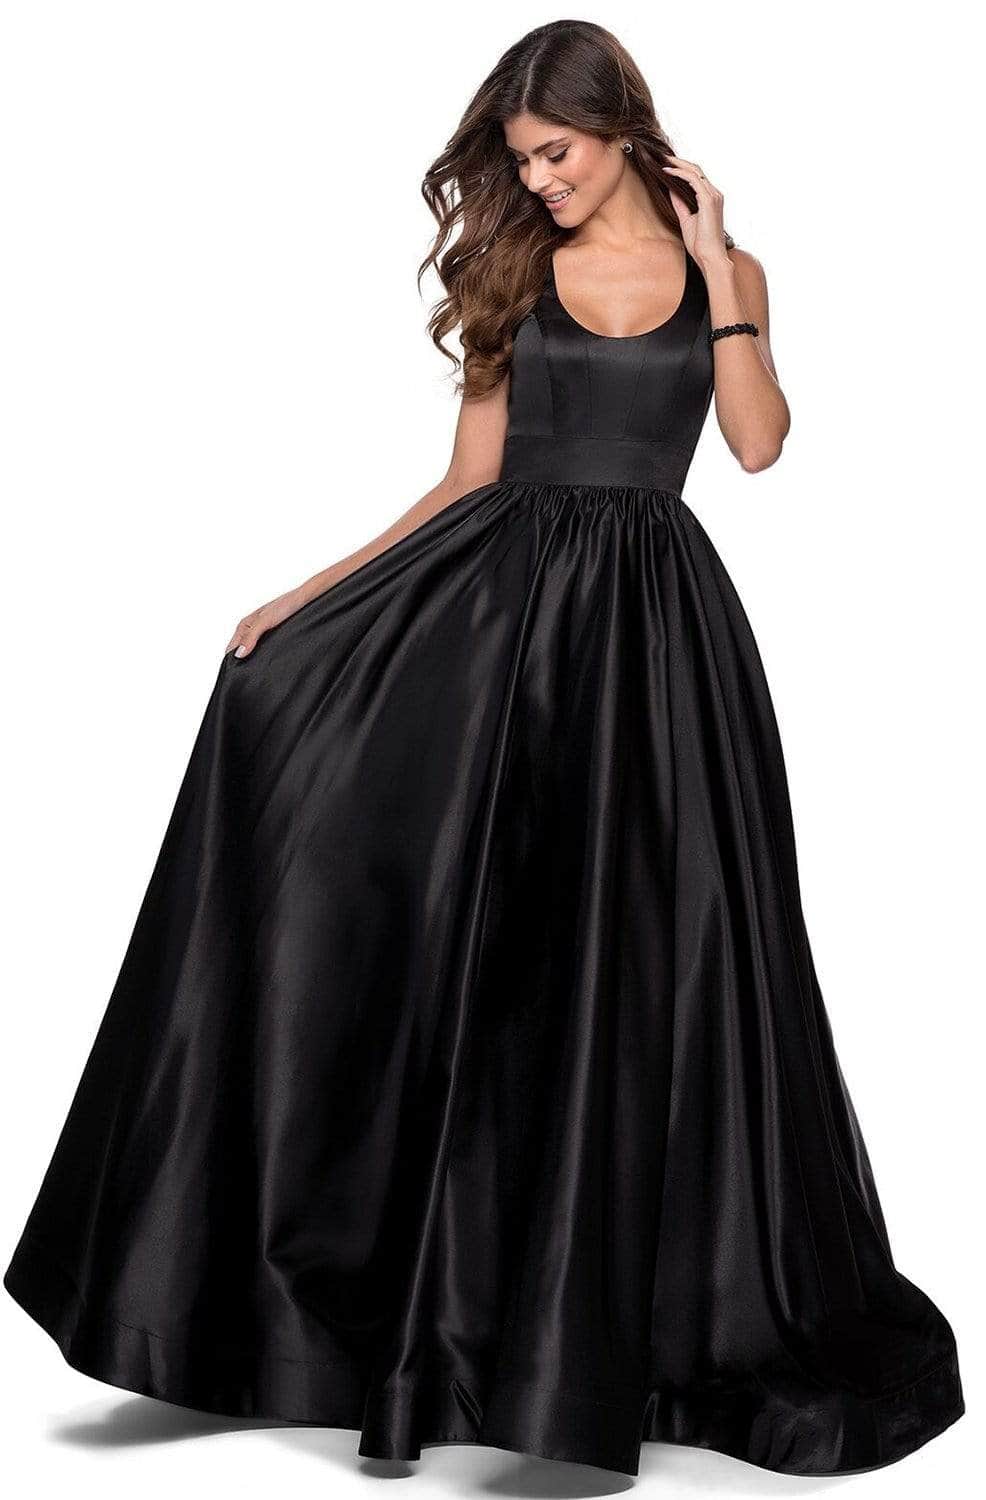 La Femme - 28281 Low Scoop Neck Pleated Ballgown - 1 pc Black In Size 10 Available CCSALE 10 / Black